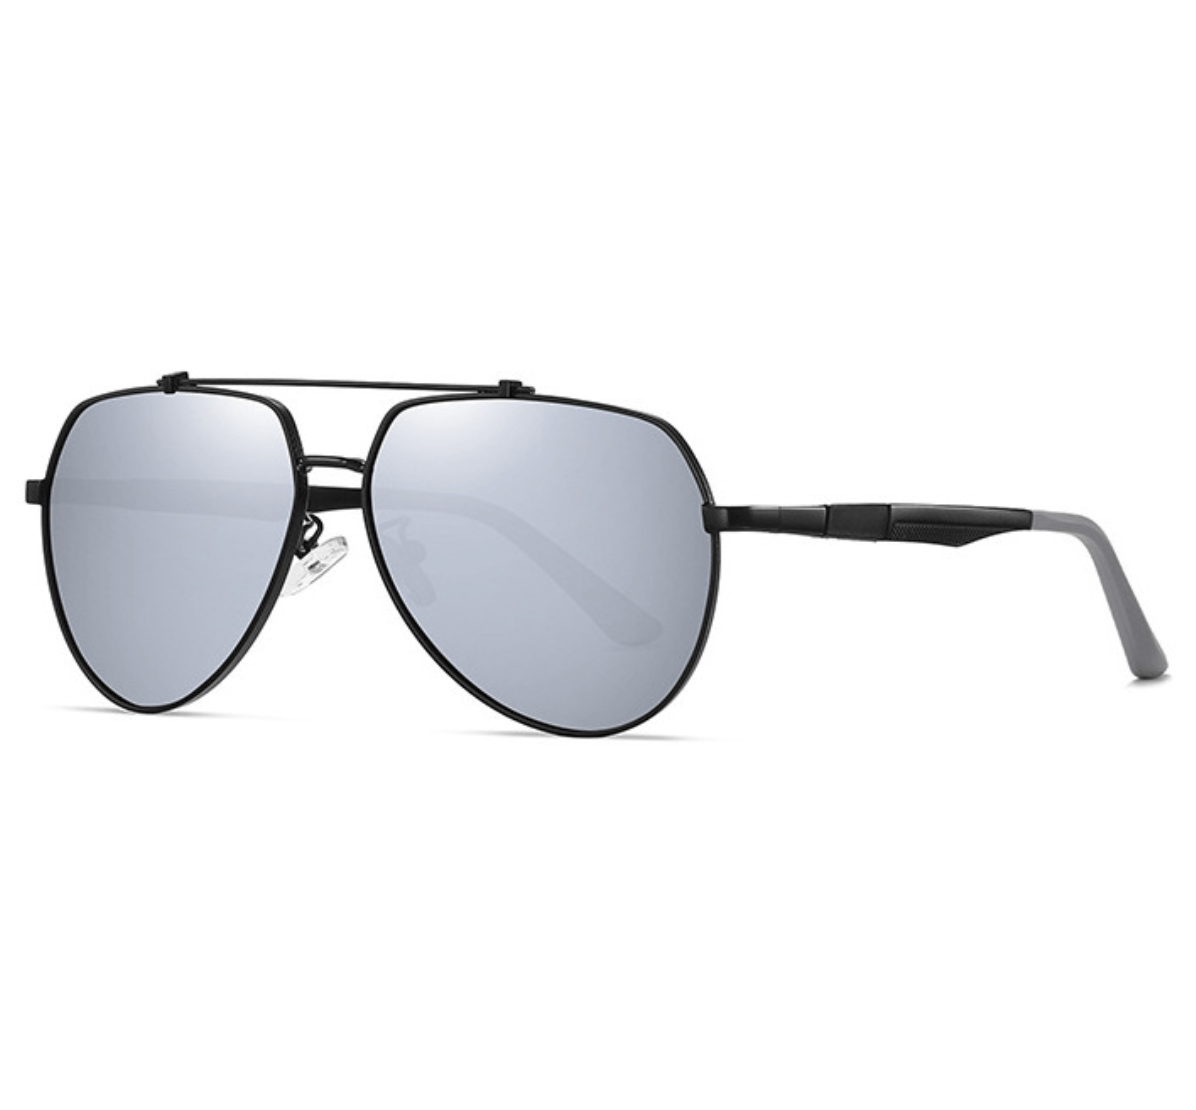 Wholesale Aviator Sunglasses, aviator sunglasses in bulk, mirror aviator sunglasses wholesale, bulk mirrored aviator sunglasses, mirrored aviator sunglasses polarized, wholesale sunglasses supplier